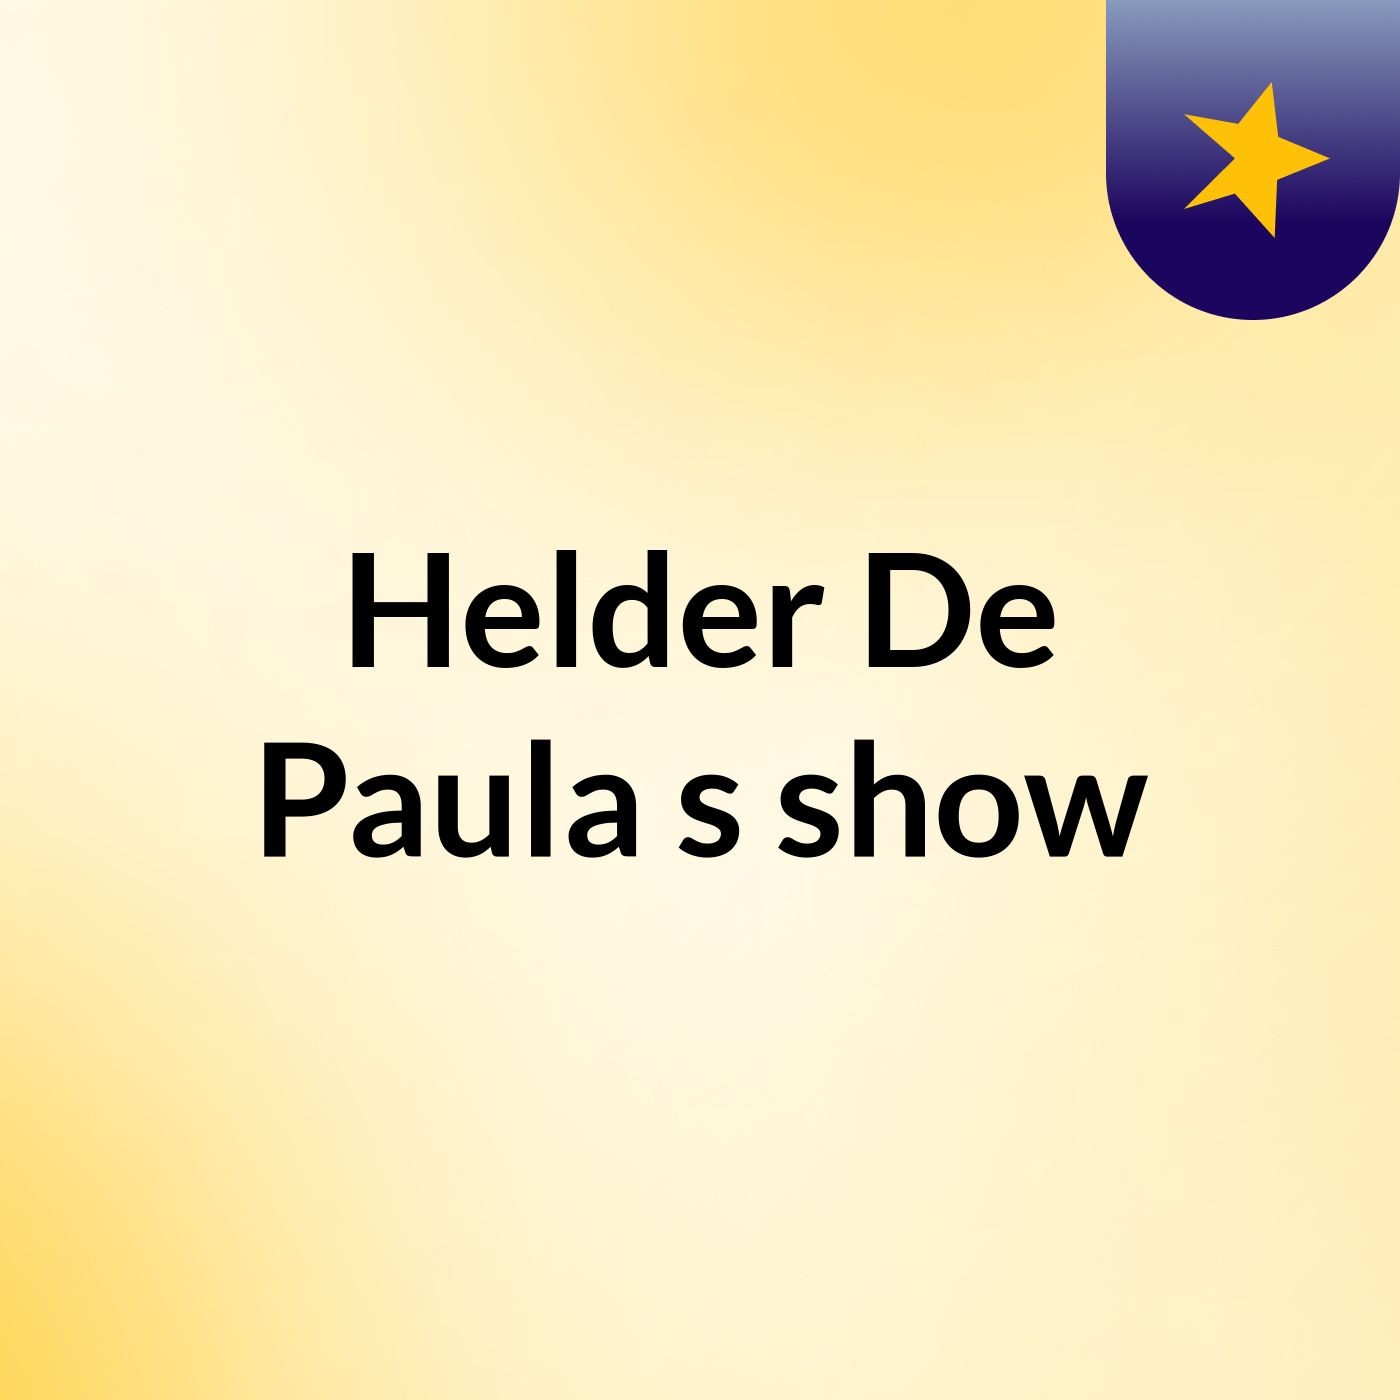 Episódio 7 - Helder De Paula's show